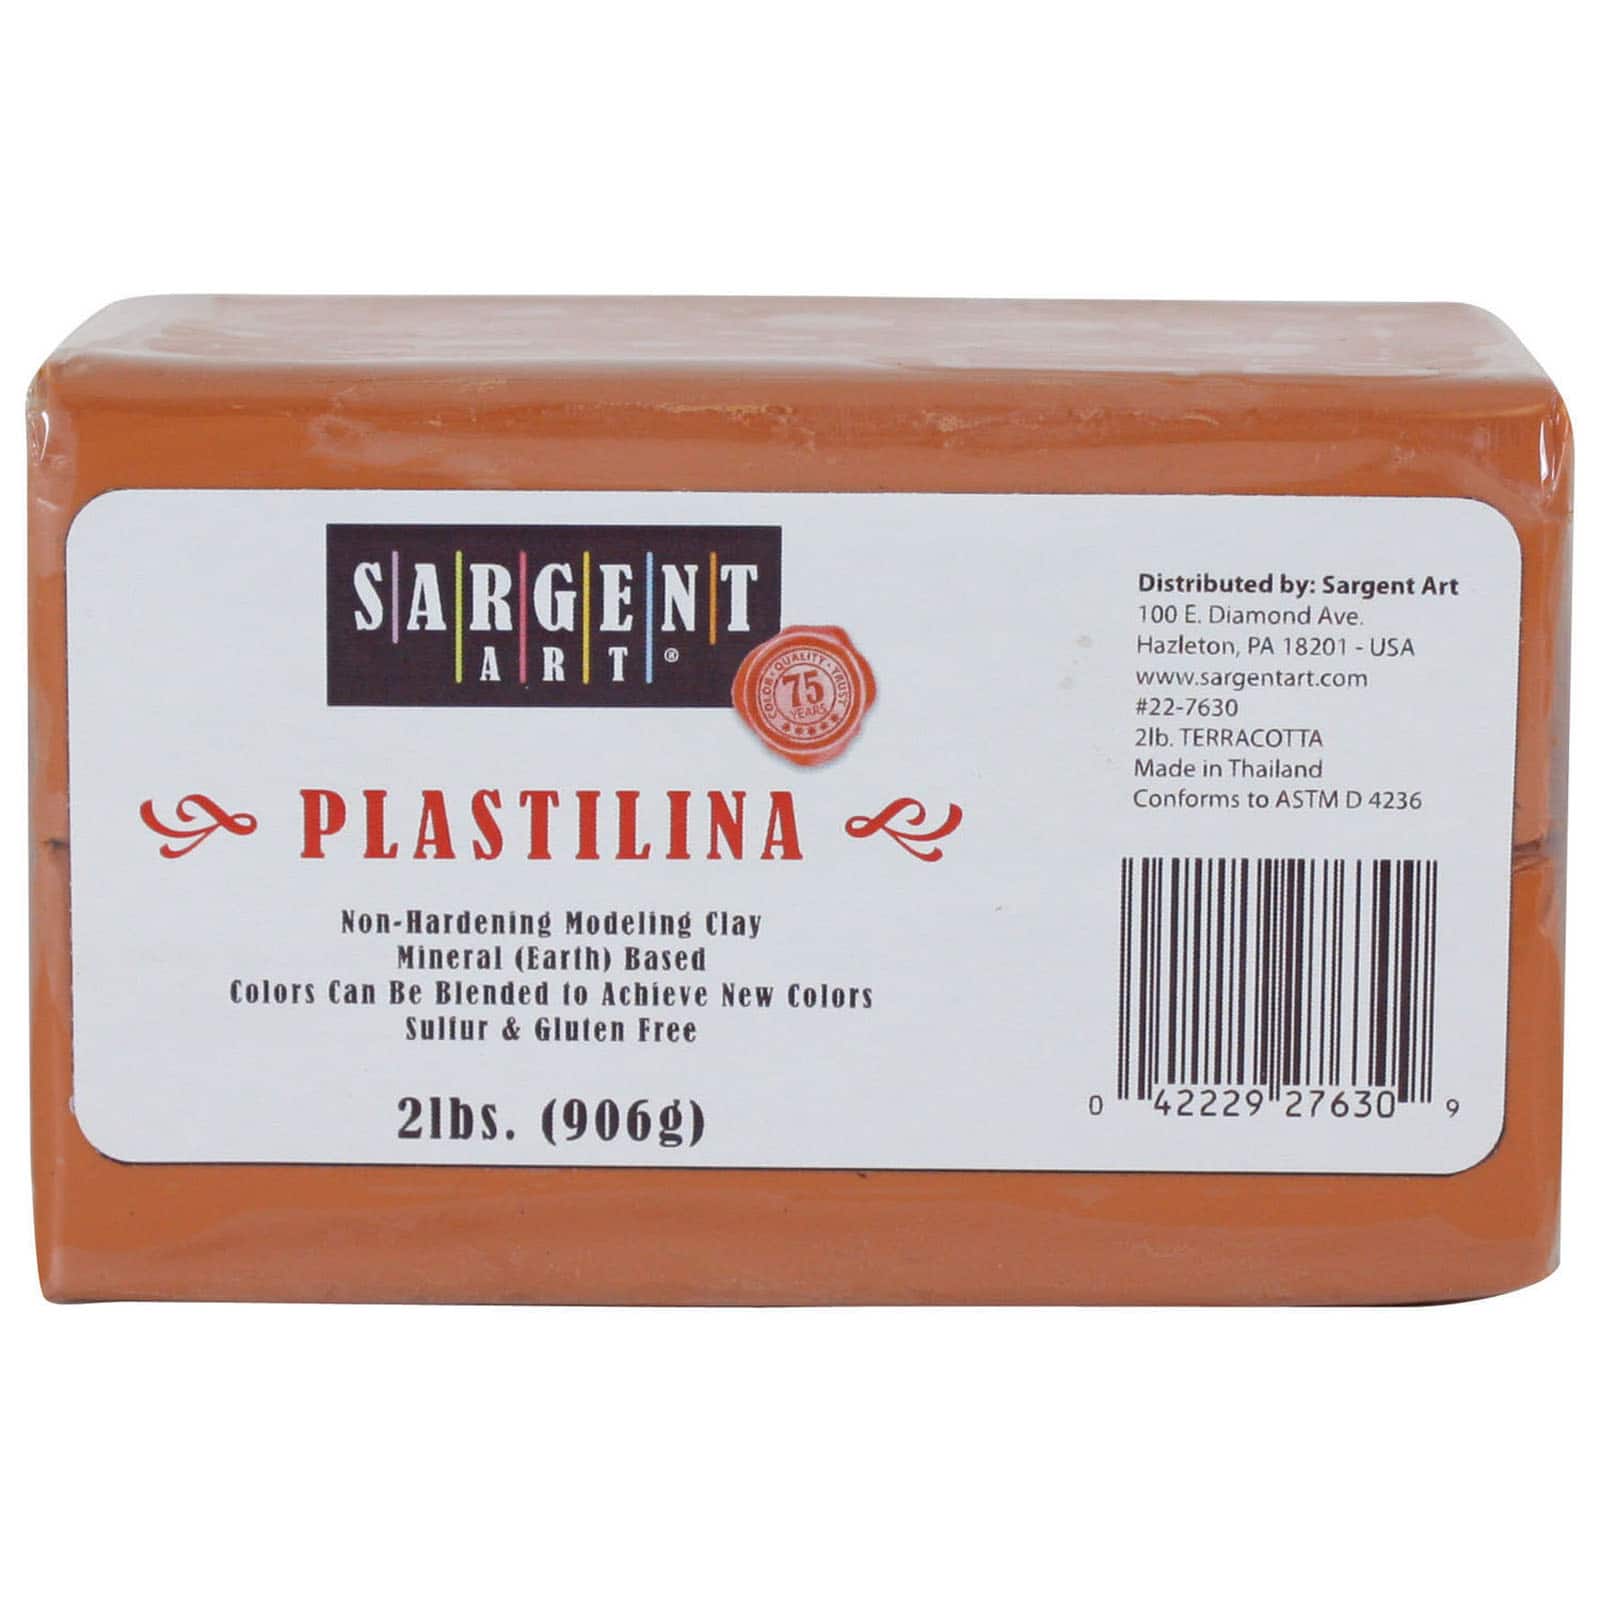 Sargent Art® 2lb. Plastilina Non-Hardening Modeling Clay, 3ct.